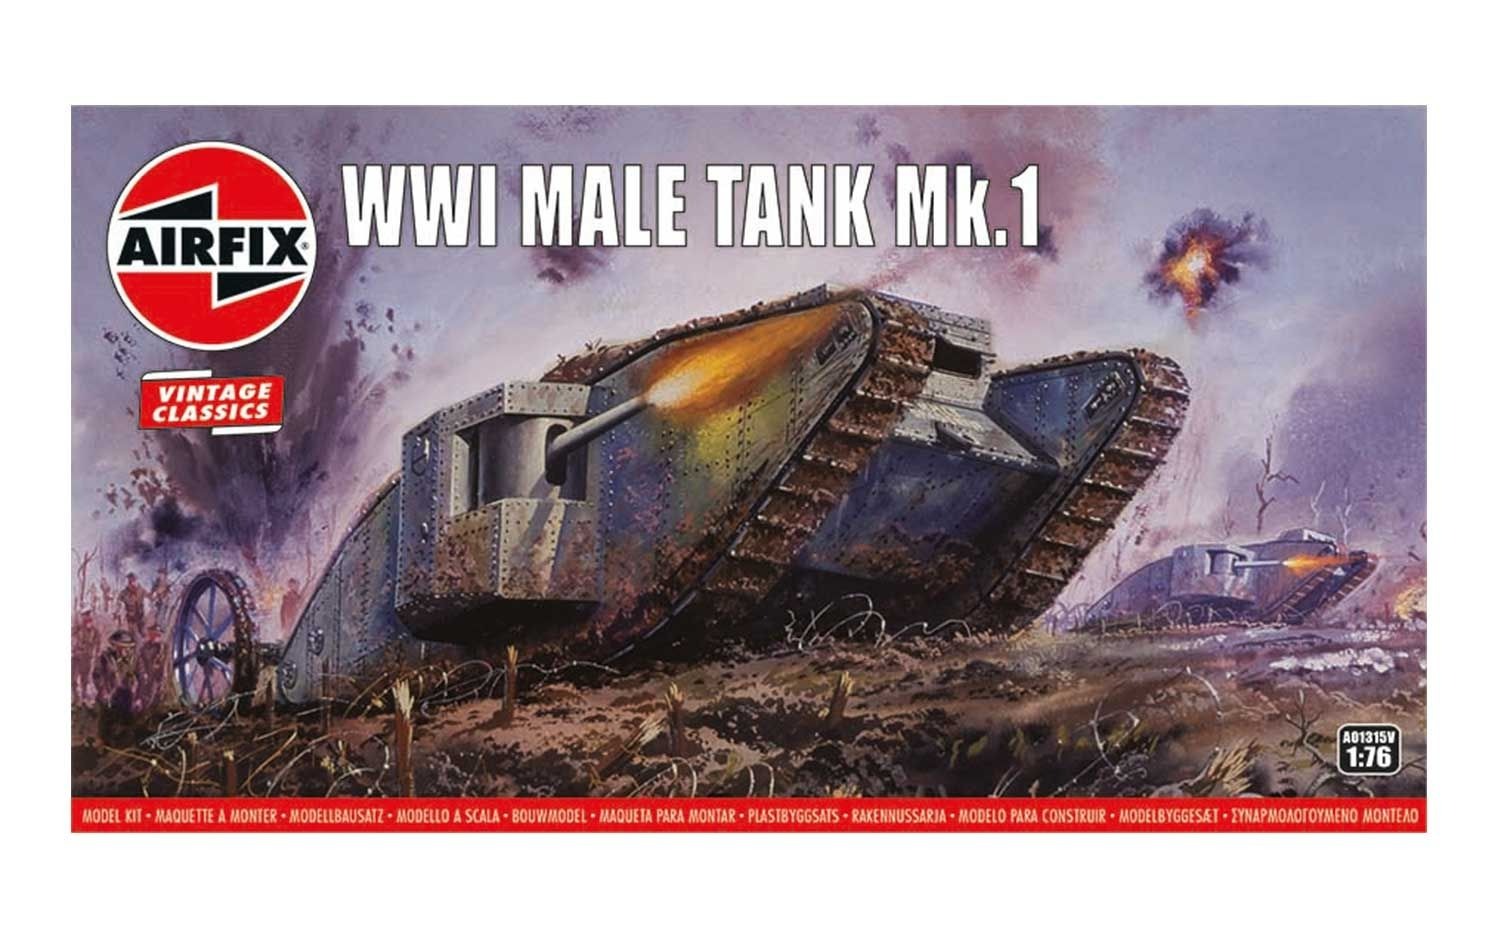 Airfix 1/76 WWI Male Tank Mk.I A01315V